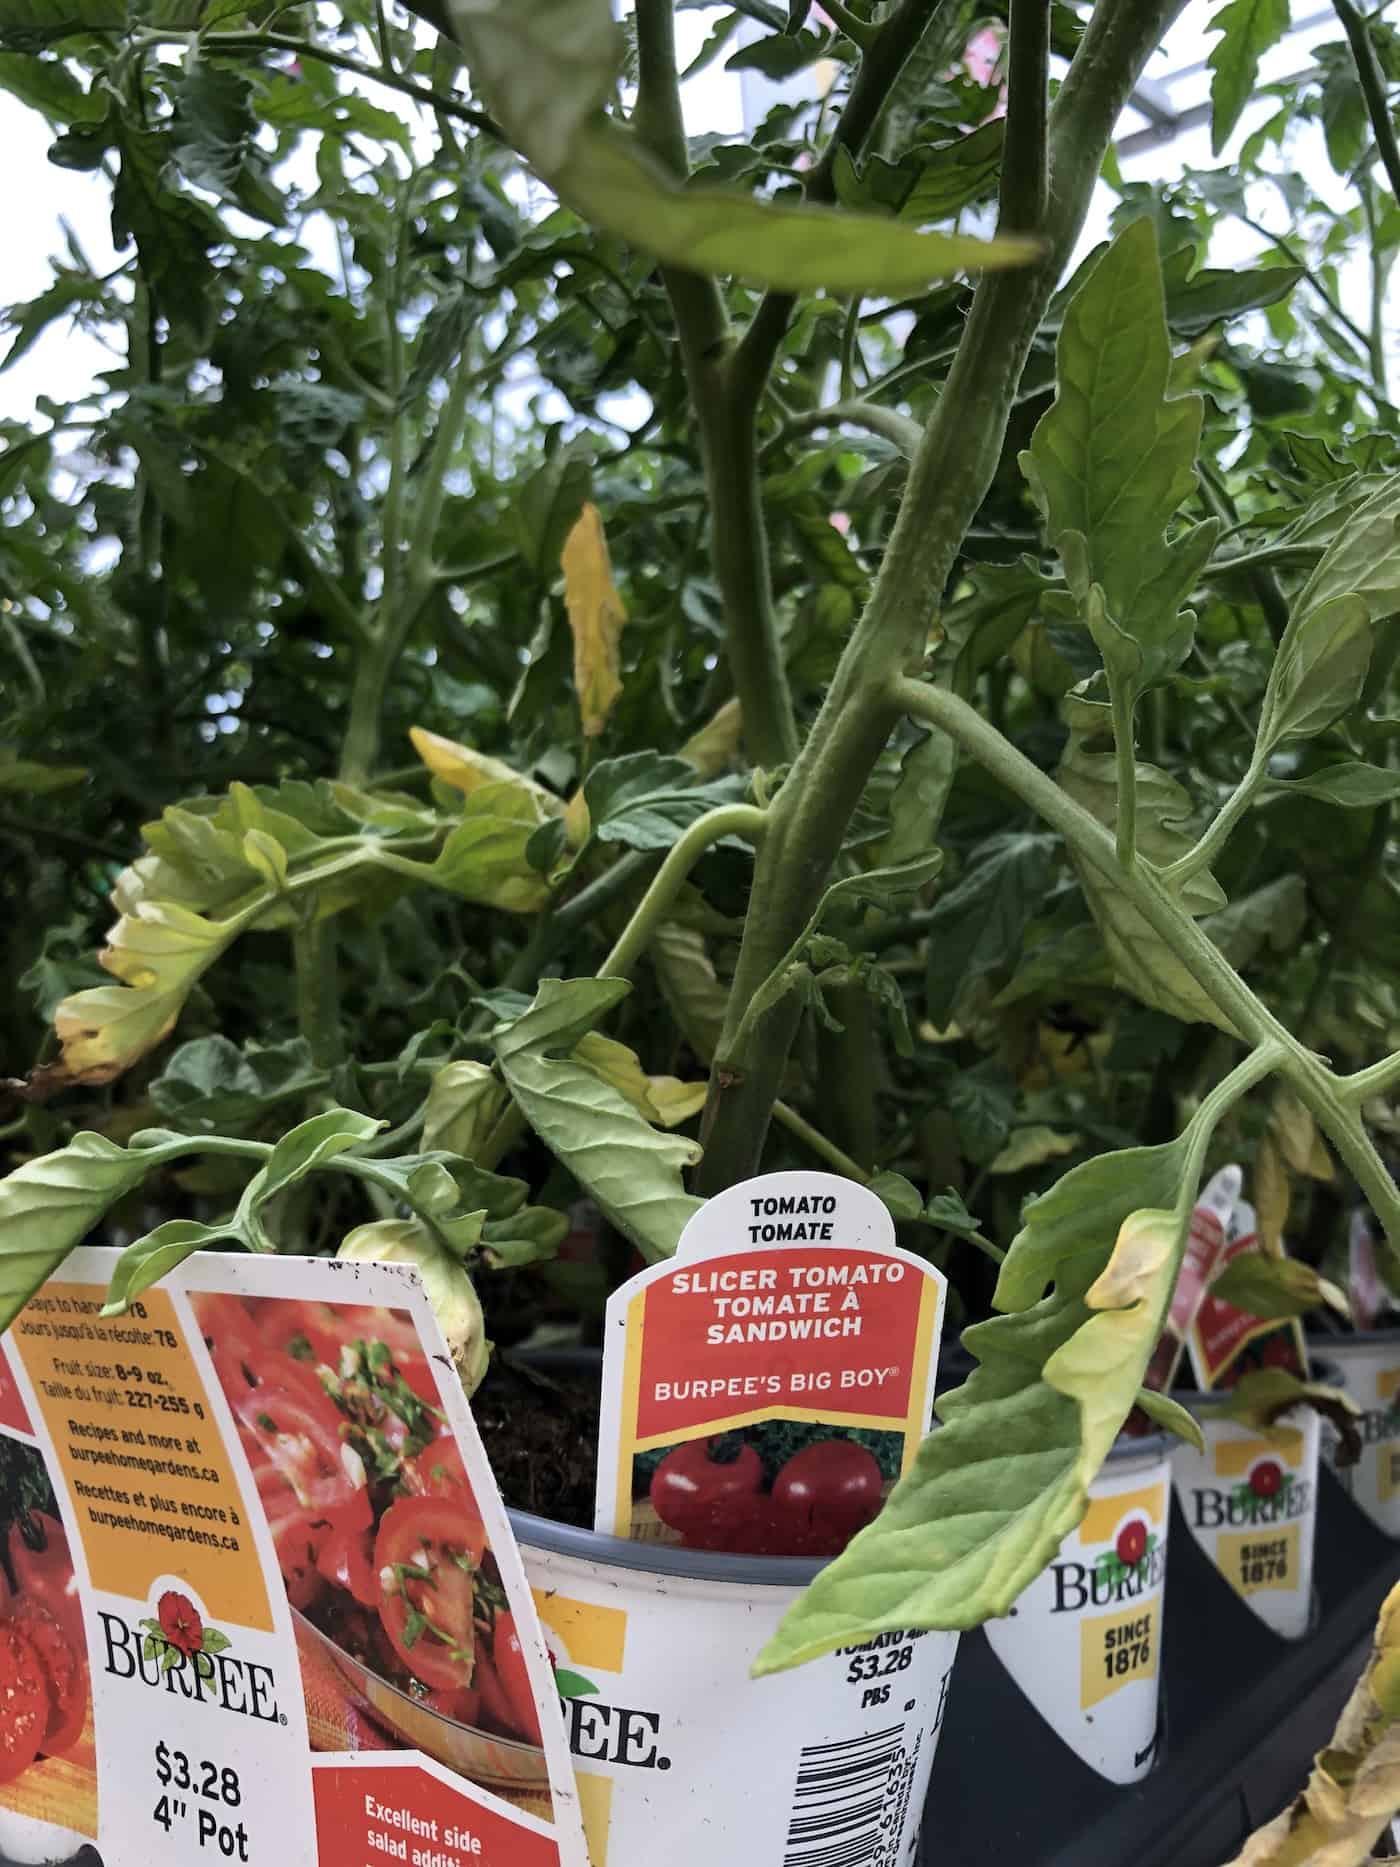 Burpee's big boy tomato plant